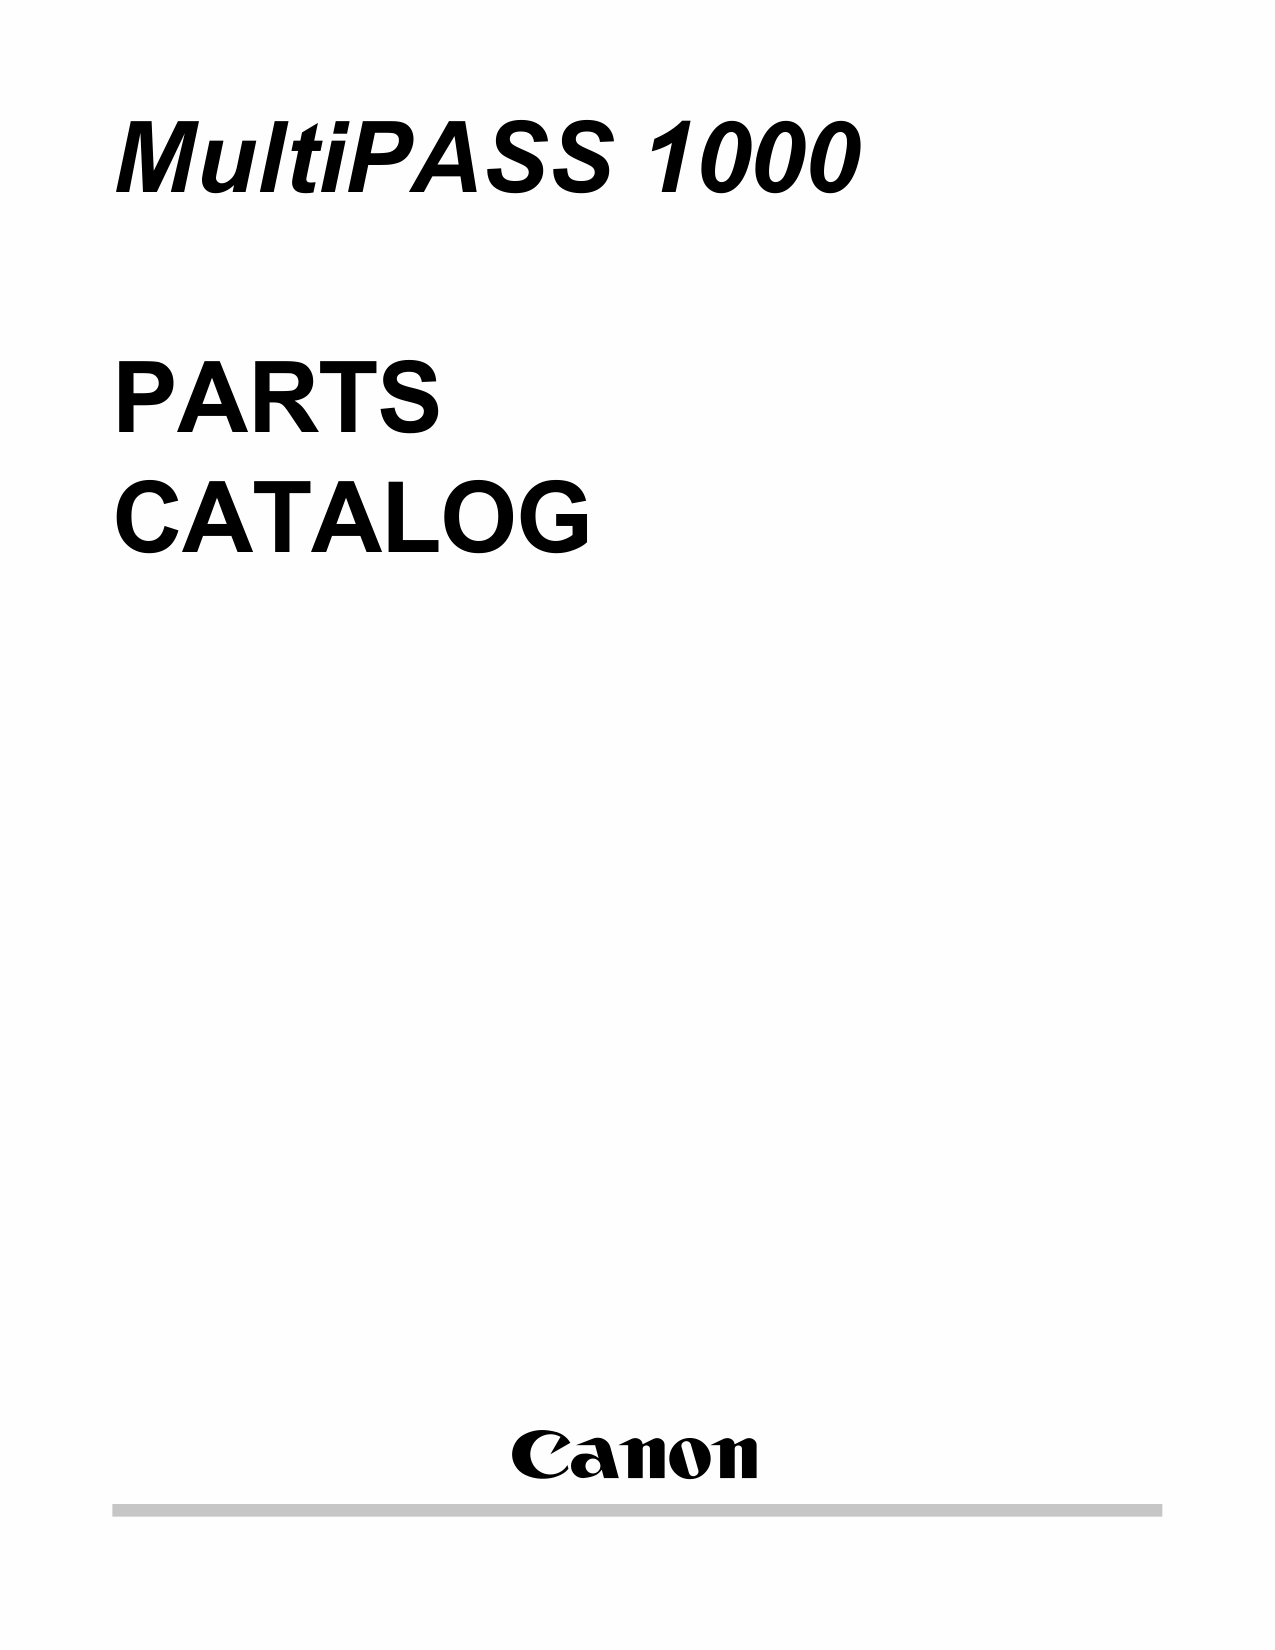 Canon MultiPASS MP-1000 Parts Catalog Manual-1